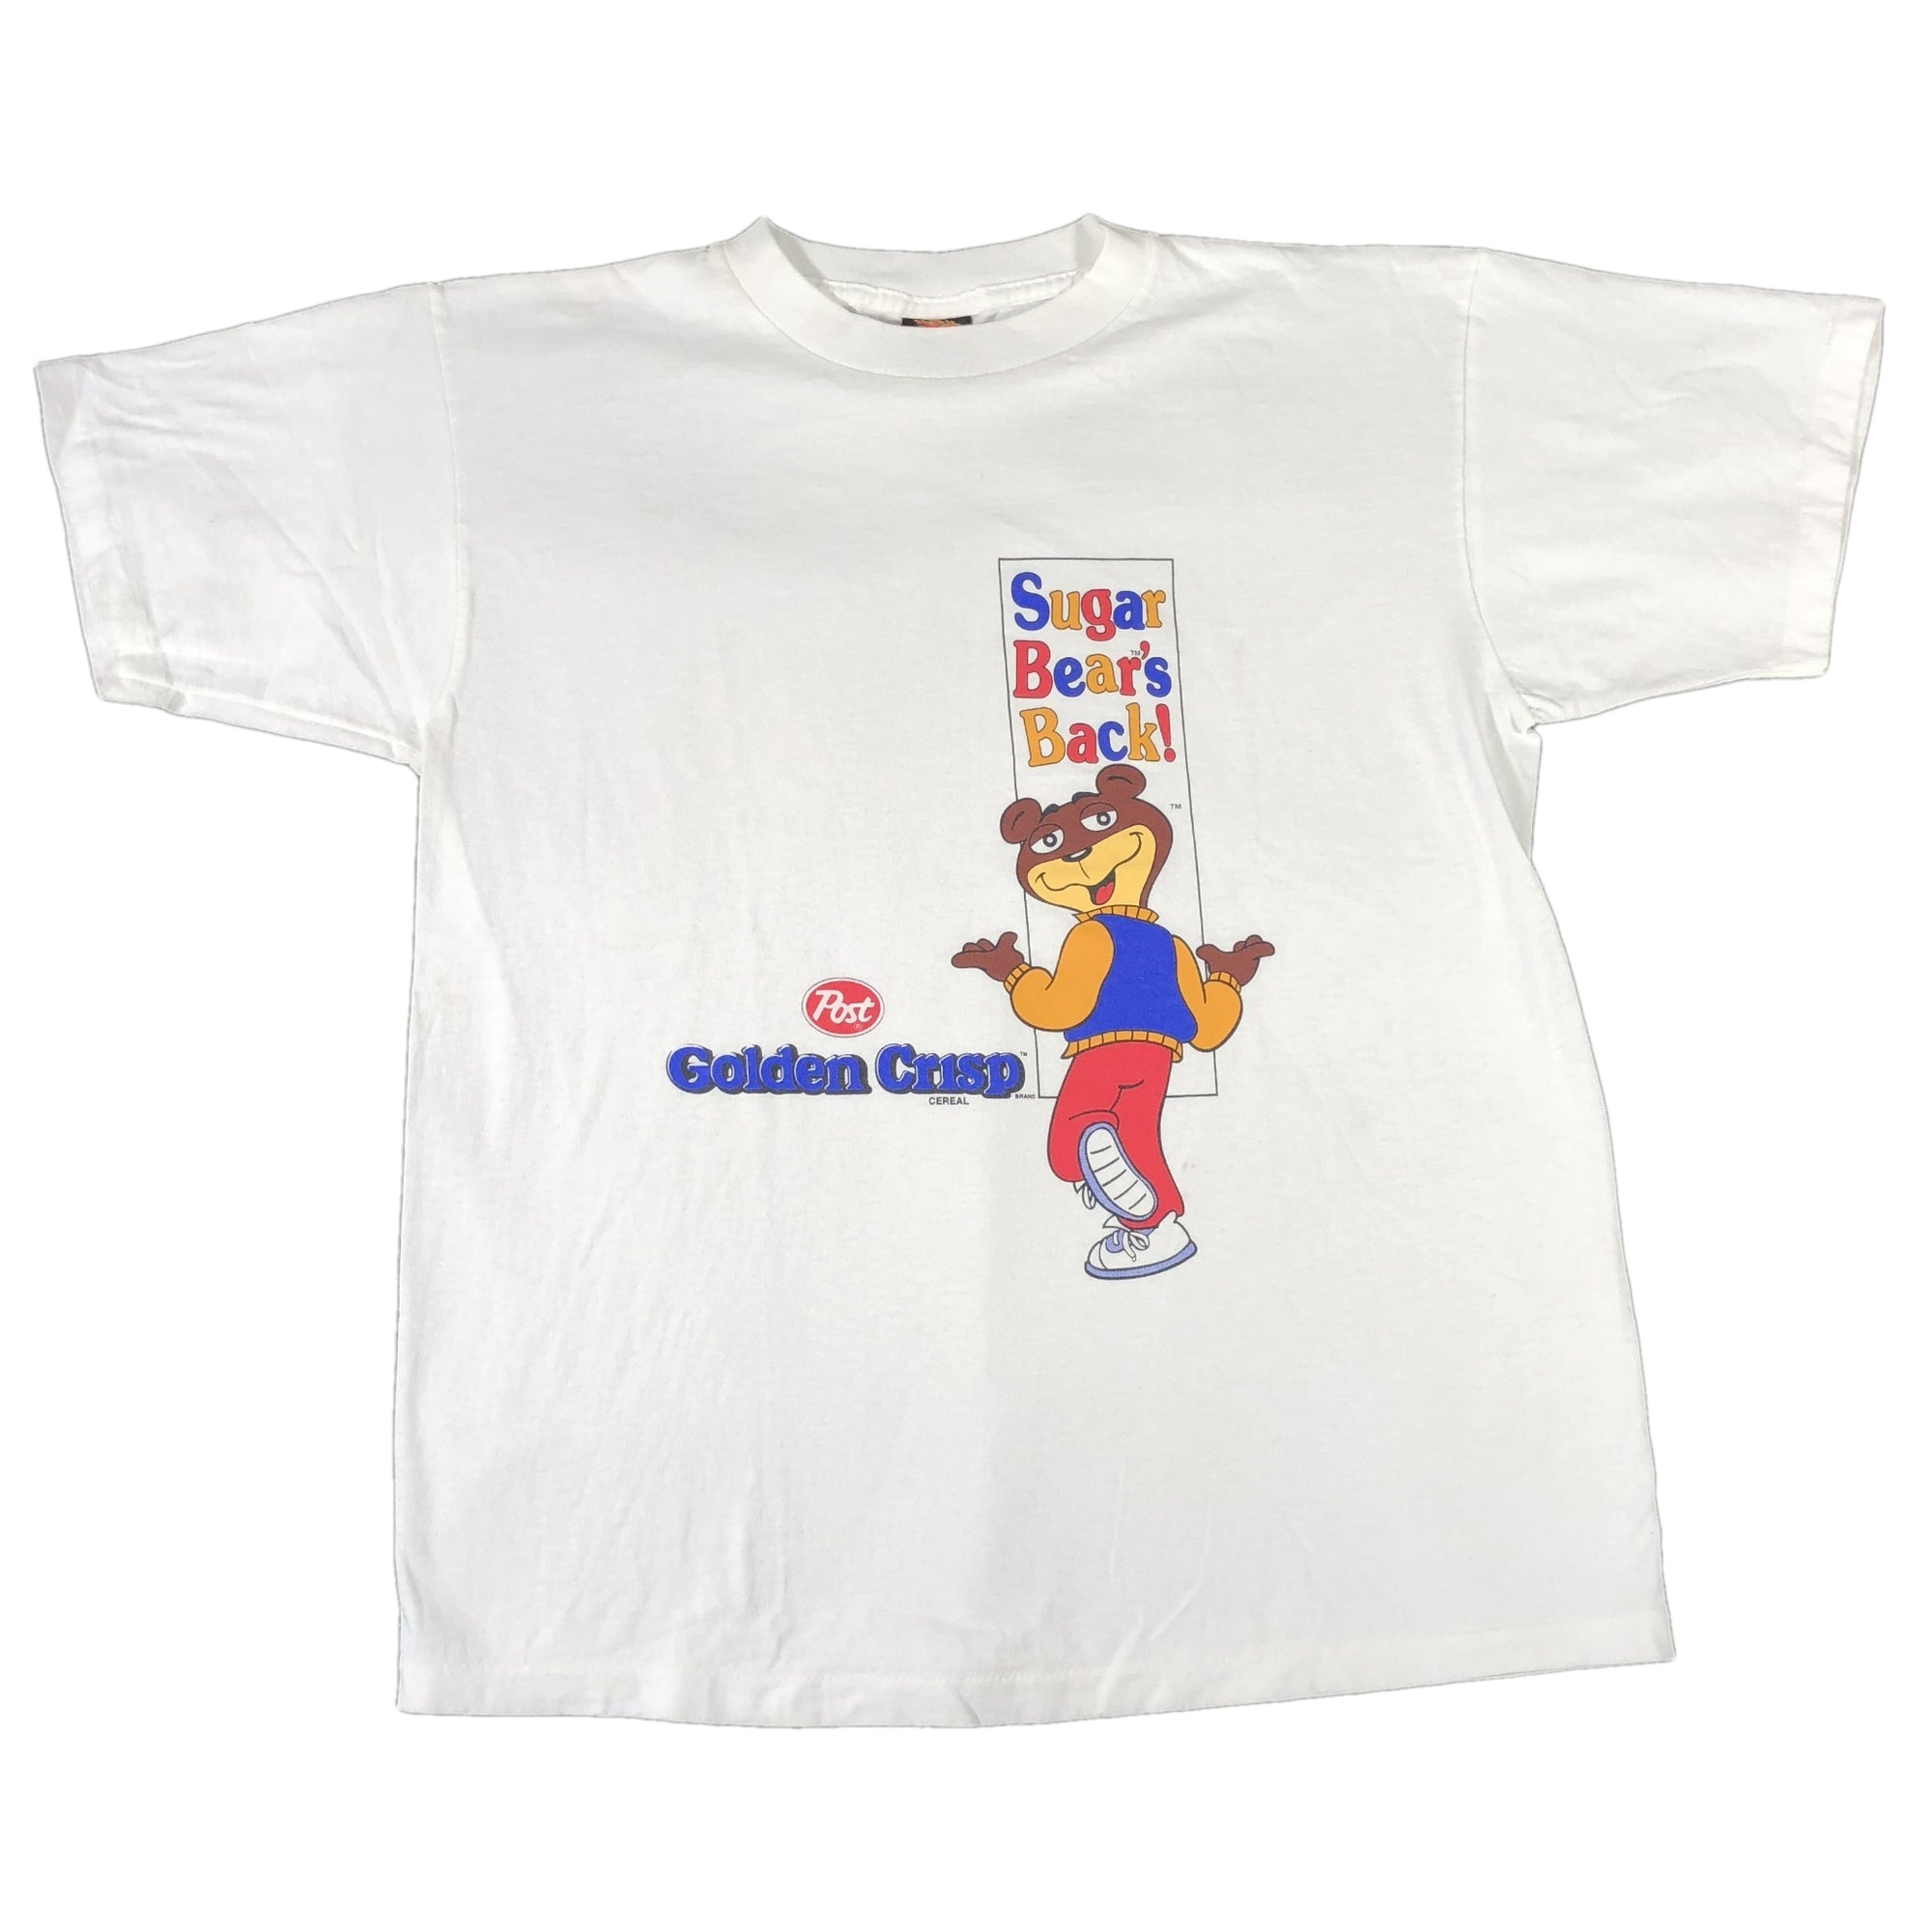 Vintage Golden Crisp "Sugar Bear's Back!" T-Shirt - jointcustodydc